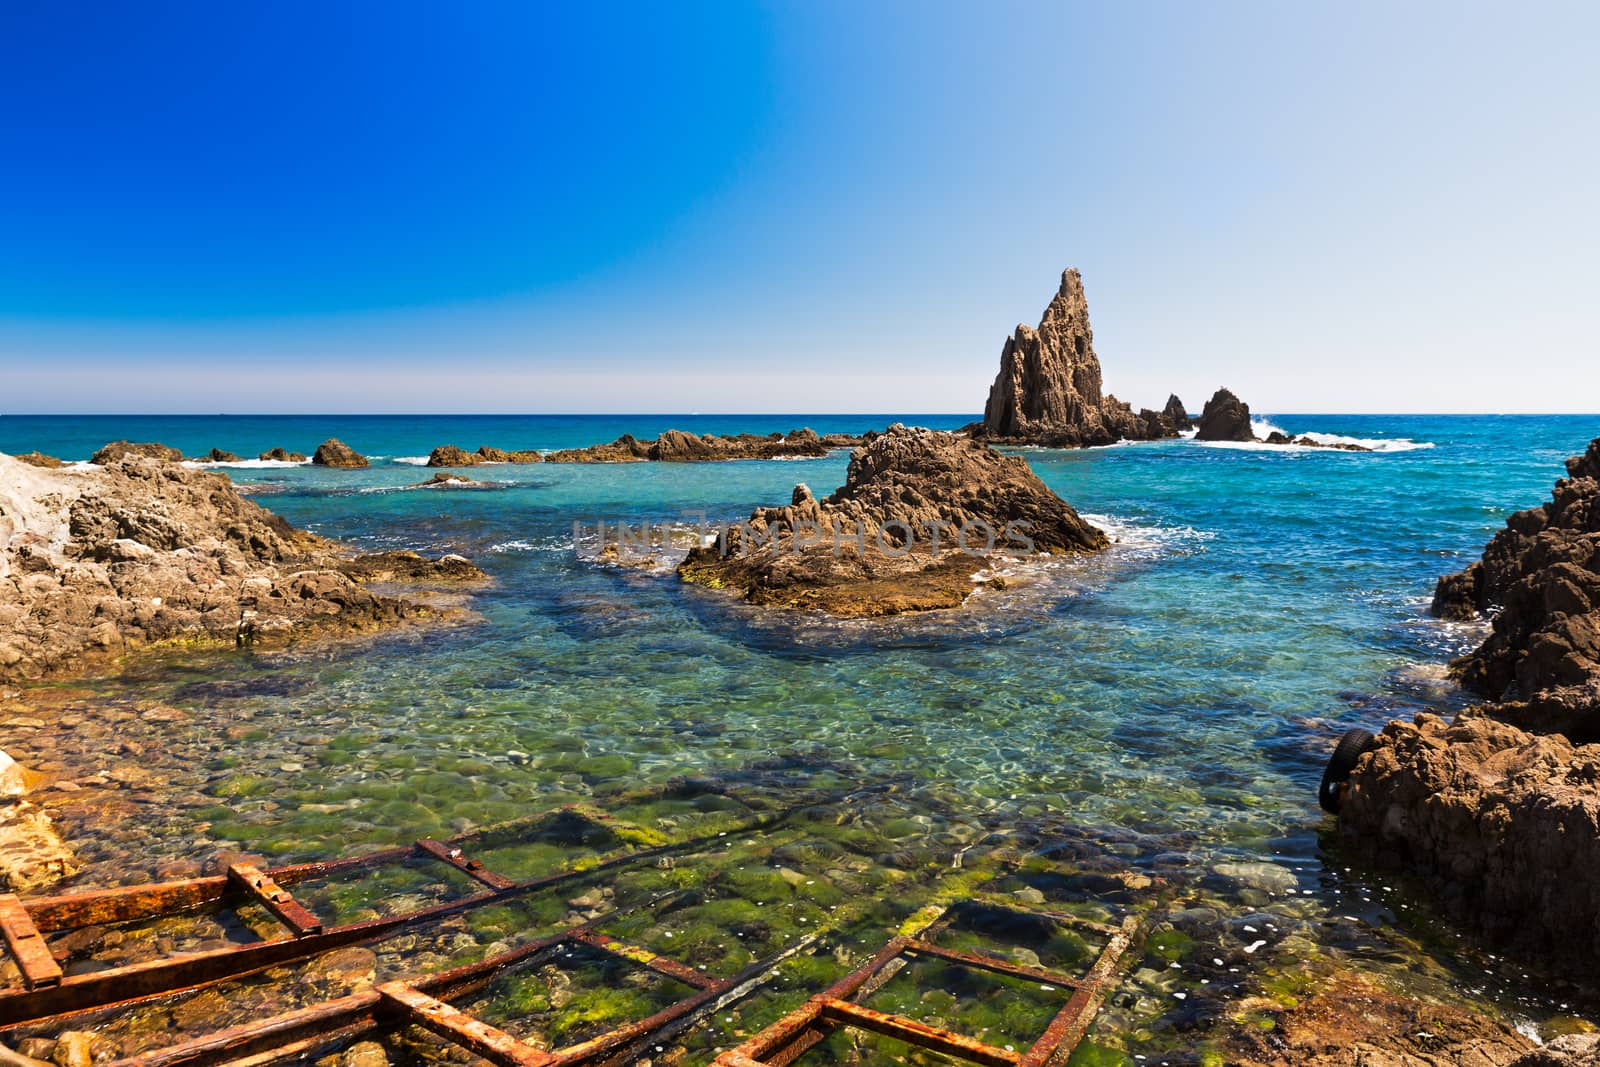 Seascape in Almeria, Cabo de Gata National Park, Spain